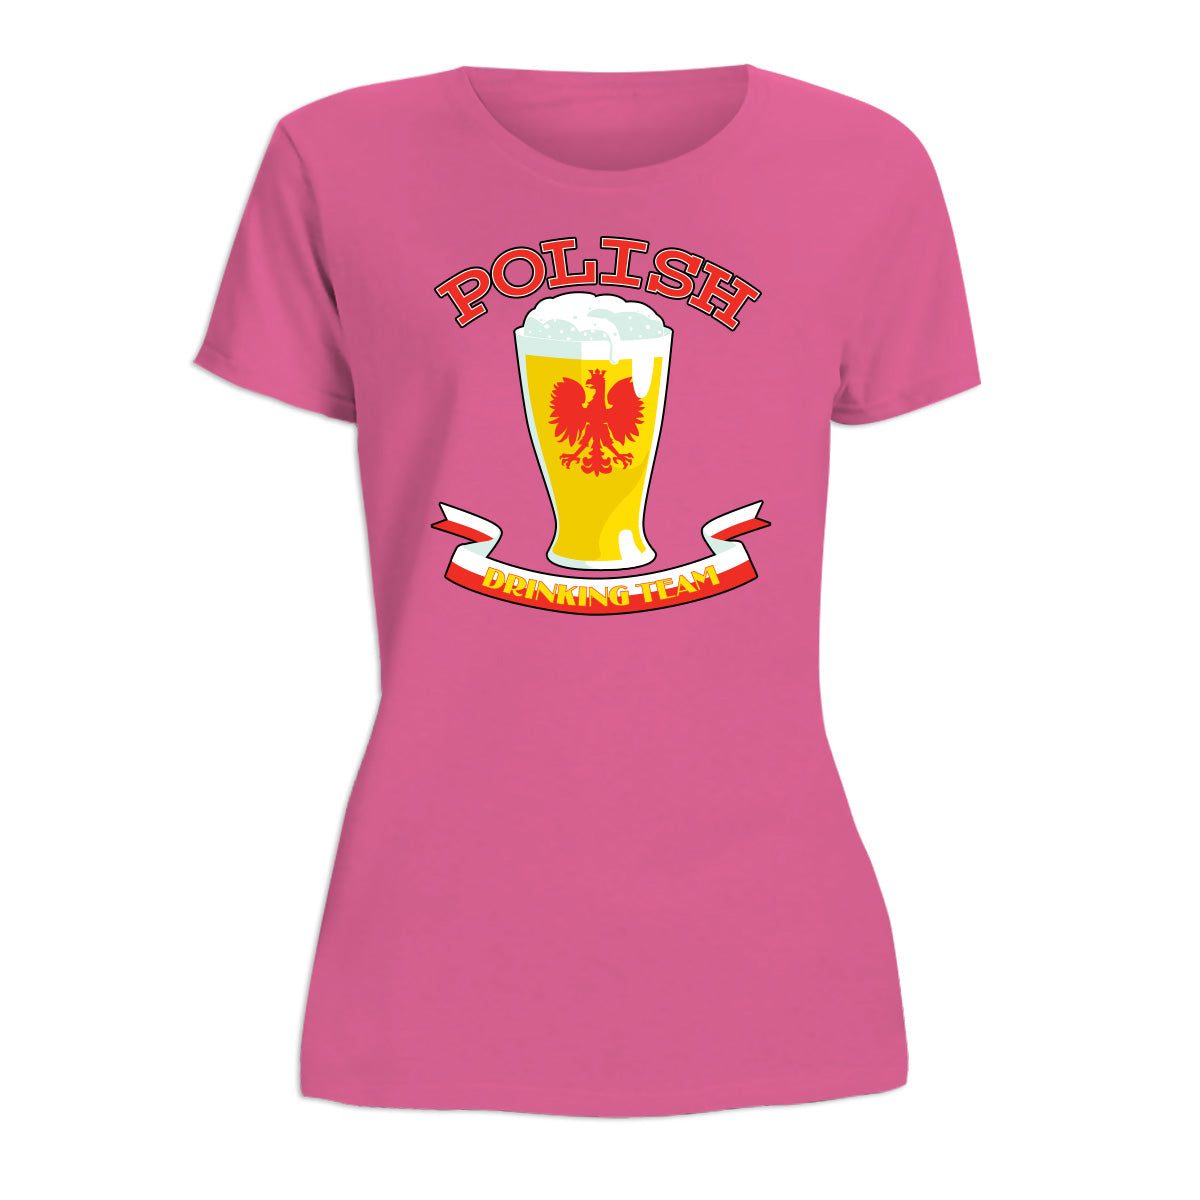 Polish Drinking Team Women's Short Sleeve Tshirt